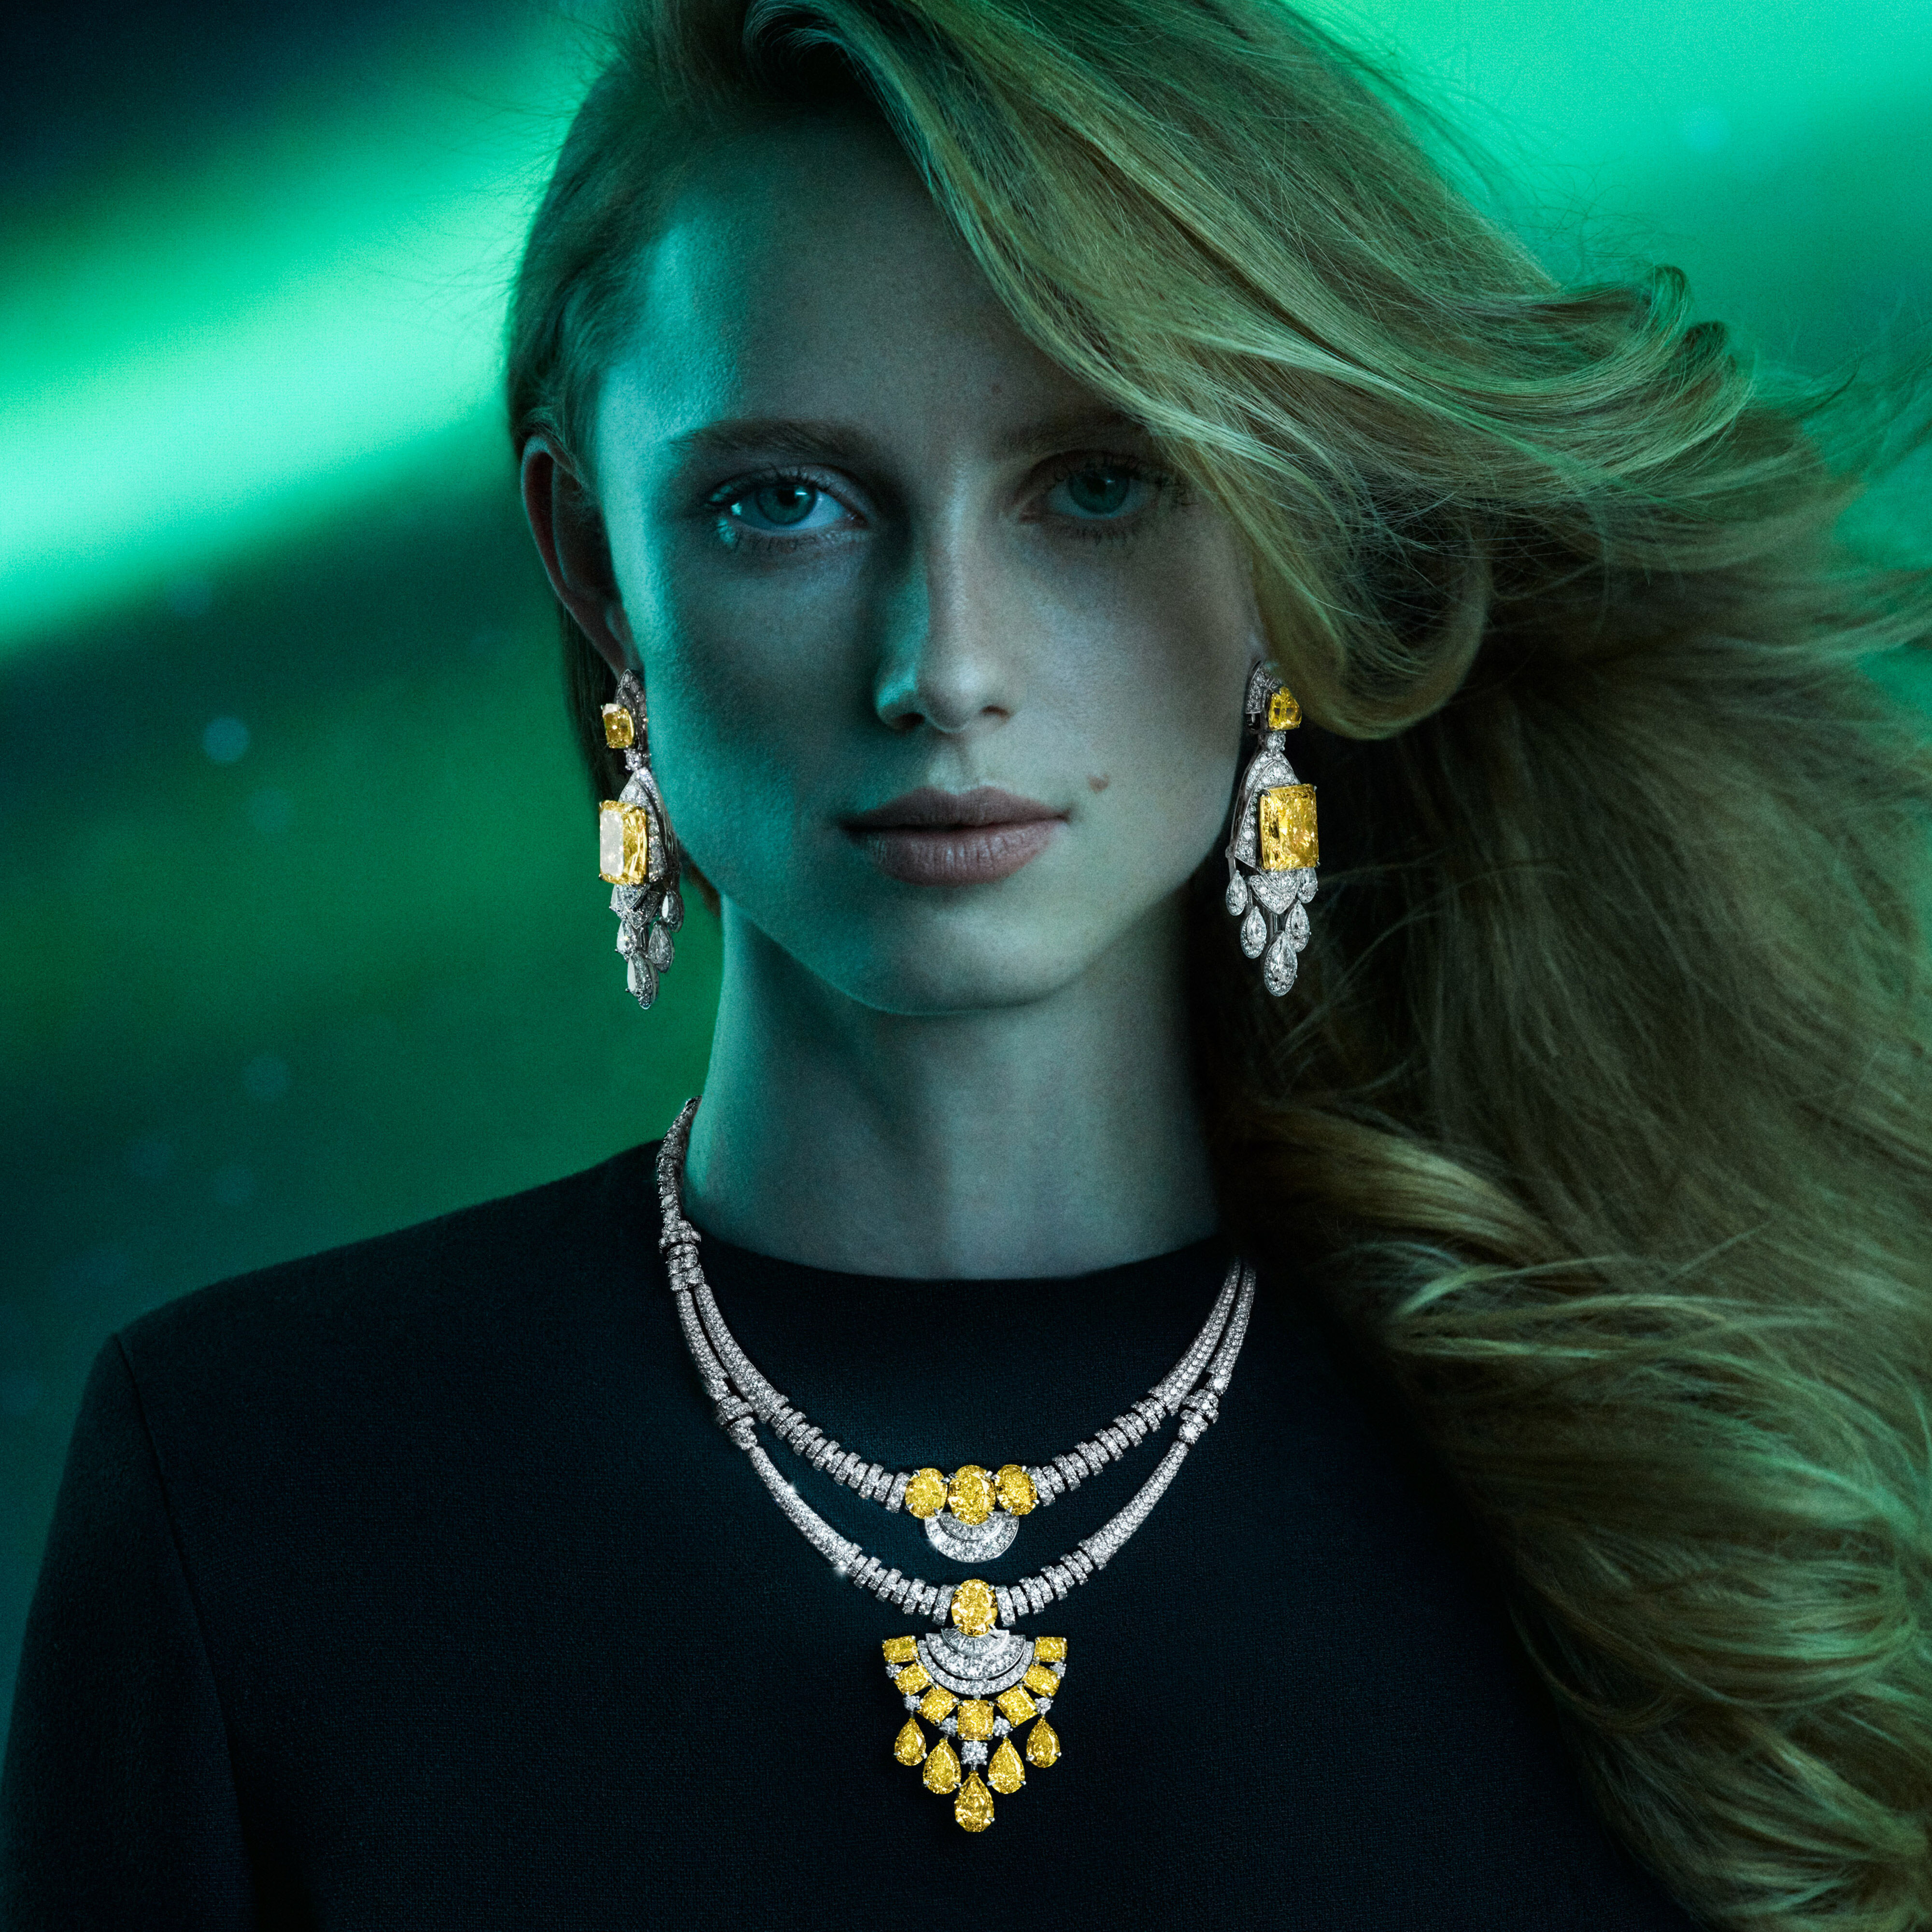 Image of model wearing Graff Galaxia Yellow Diamond High Jewellery suite